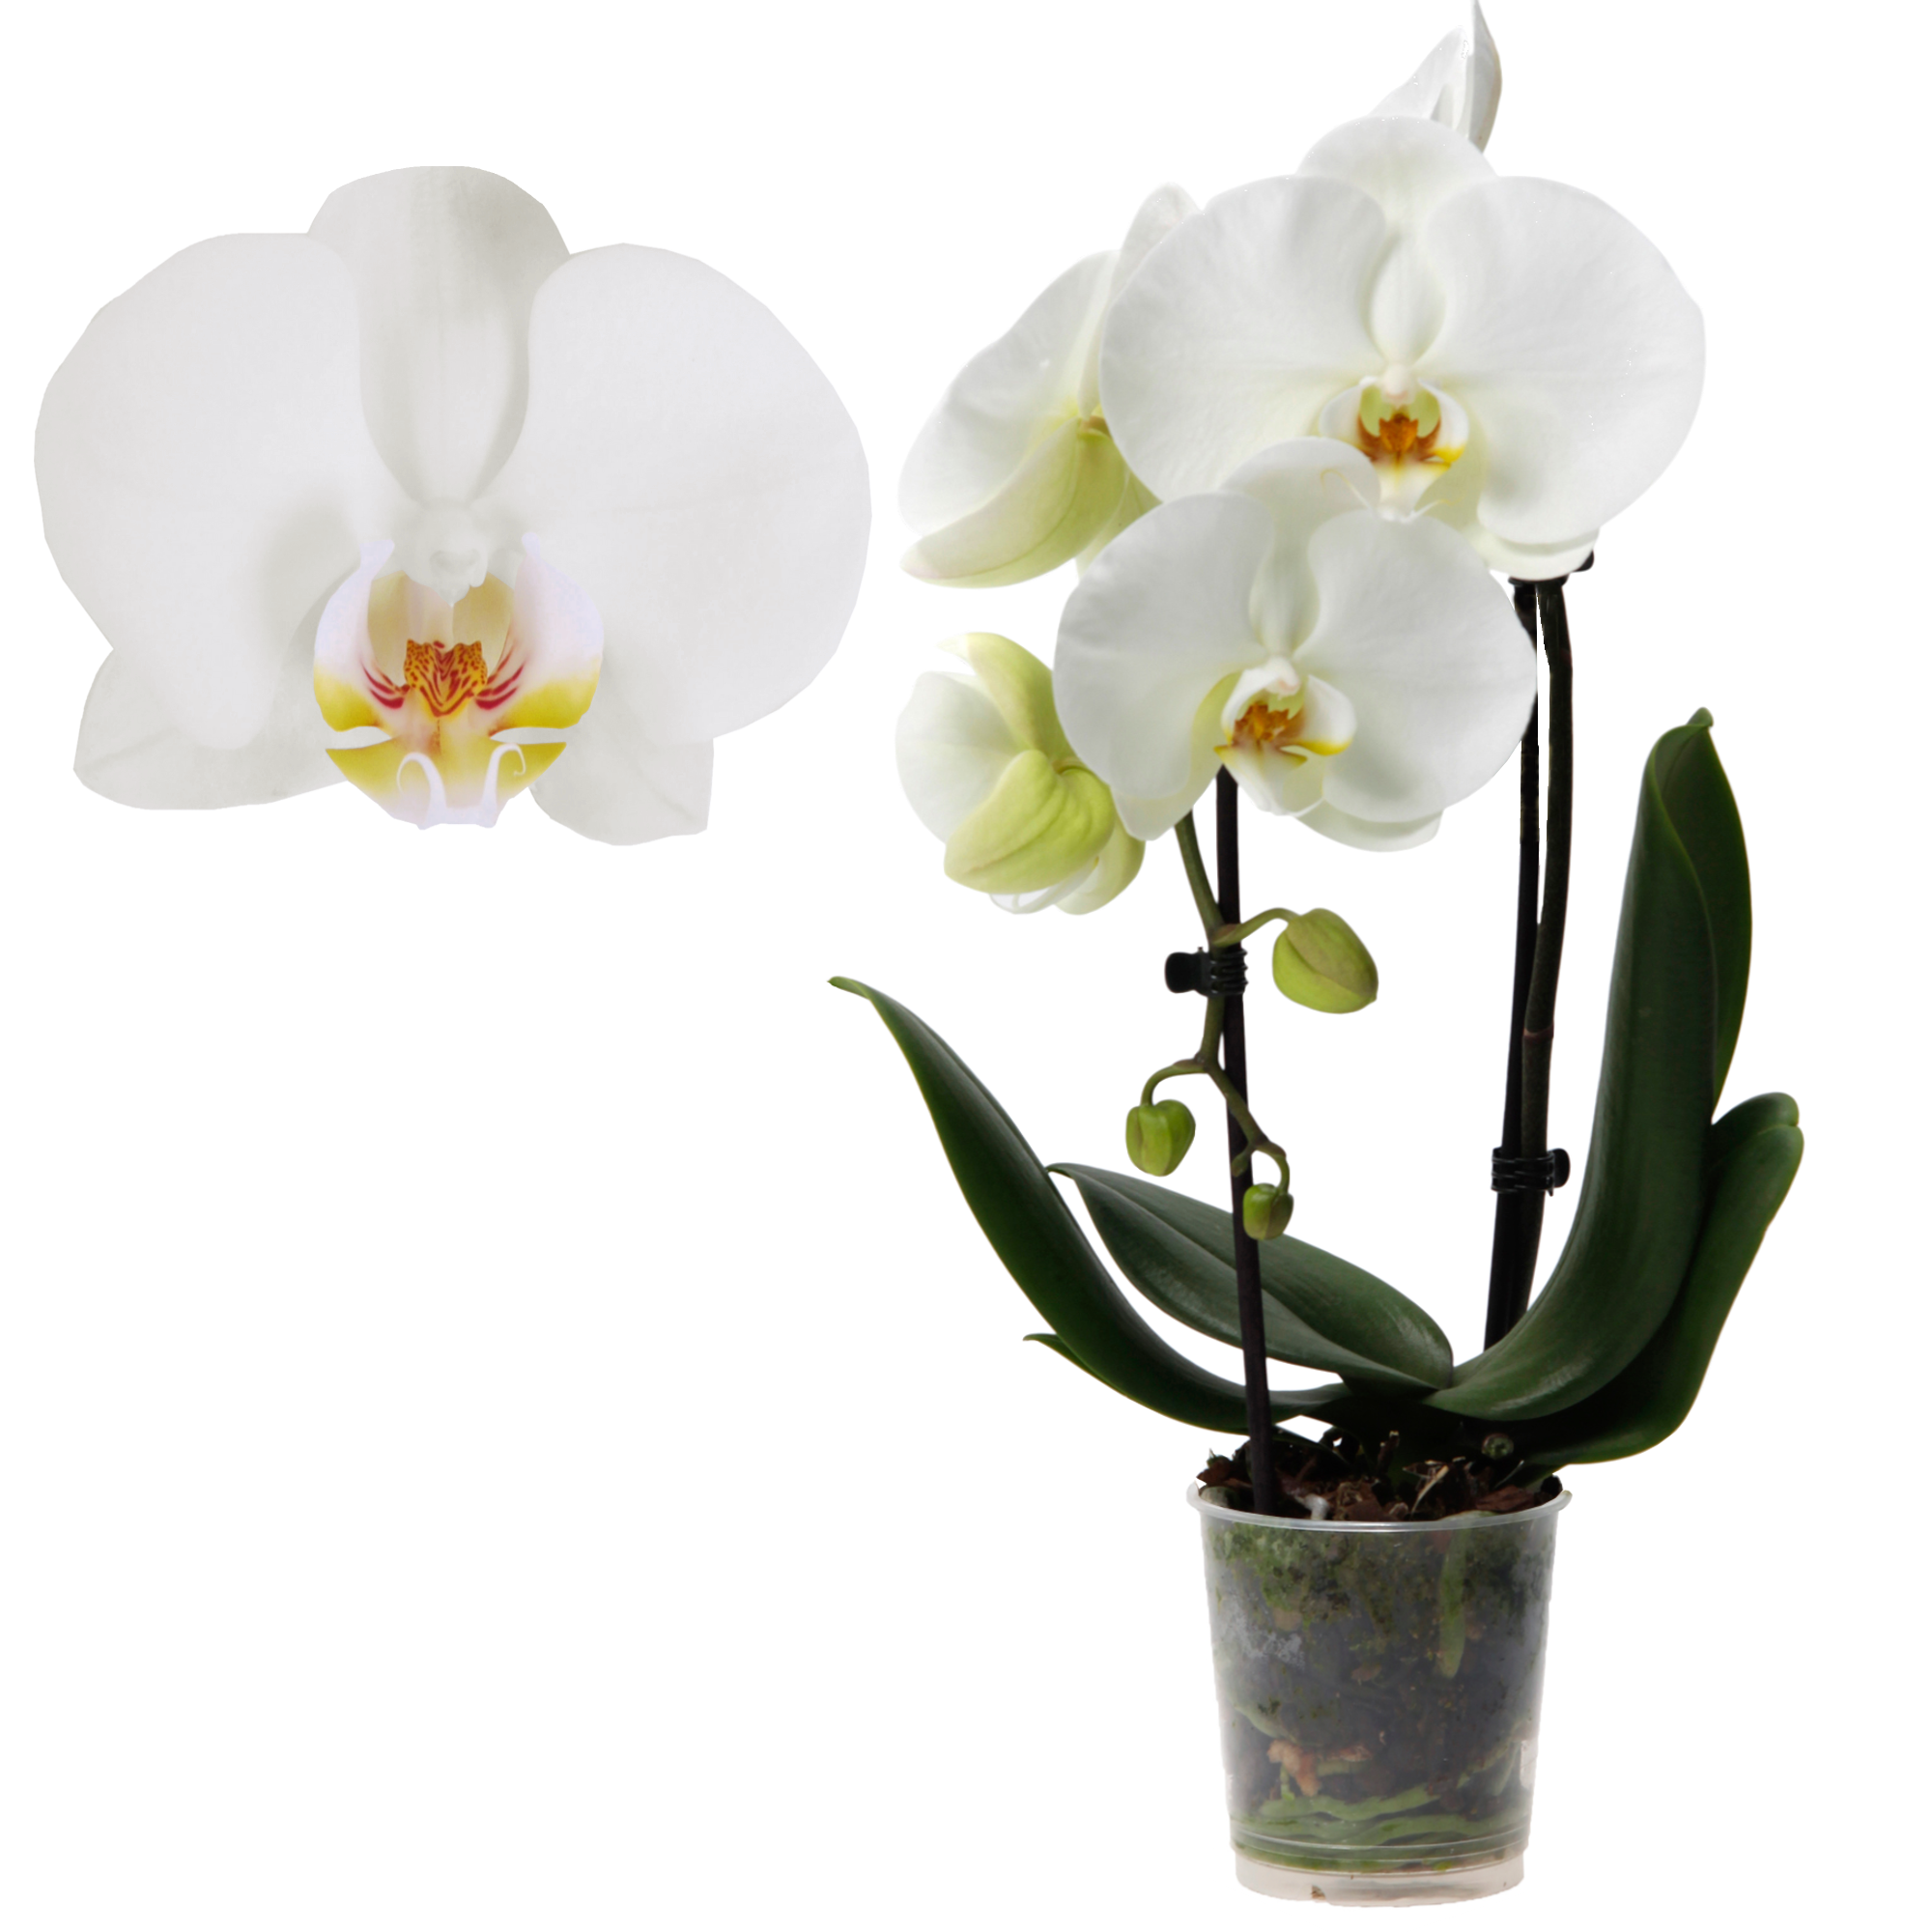 Schmetterlingsorchidee 'Big Sensation' 2 Rispen weiß, 9 cm Topf + product picture